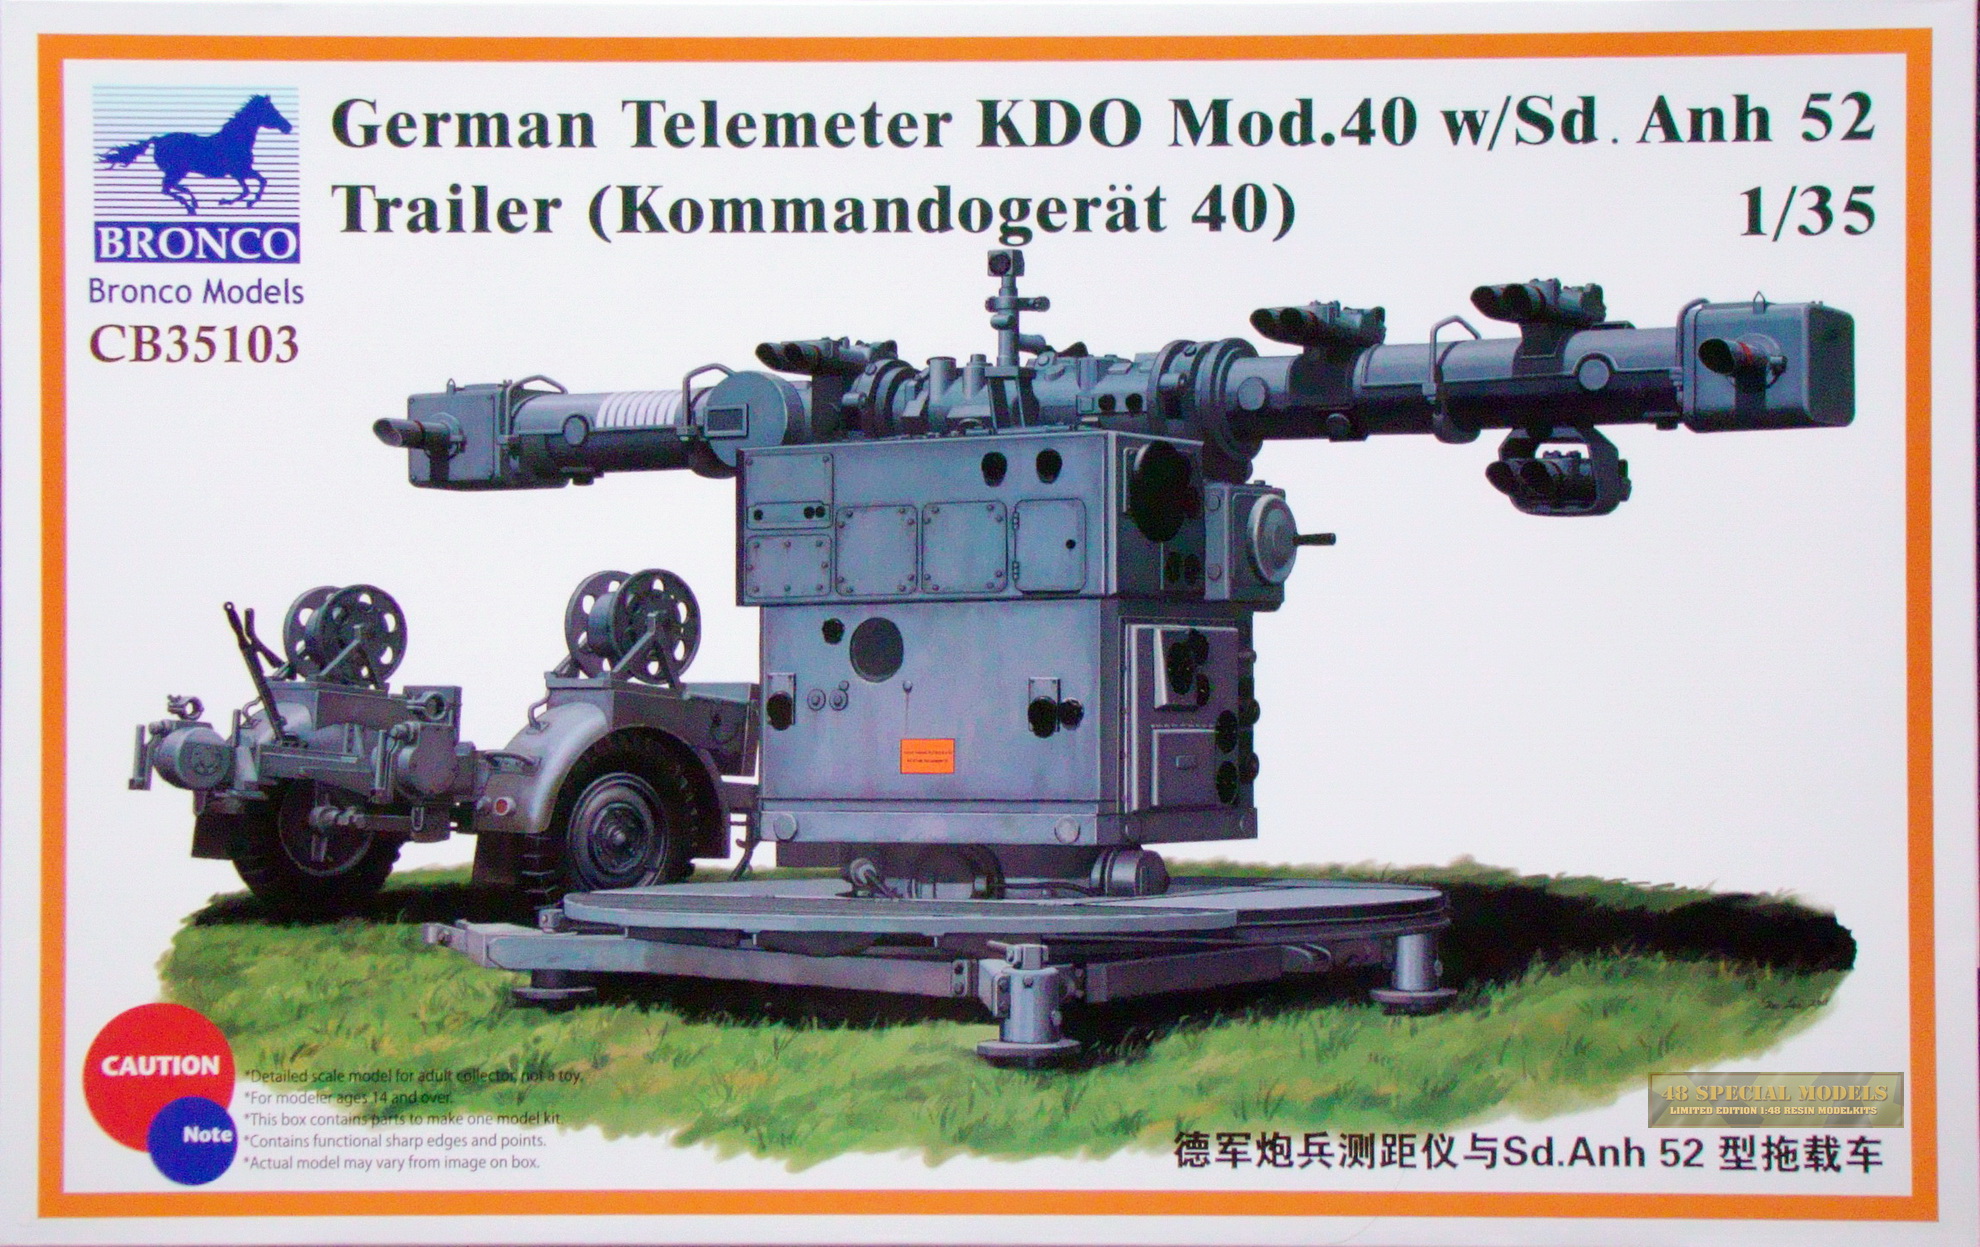 cb35103-Kommandogeraet40.jpg